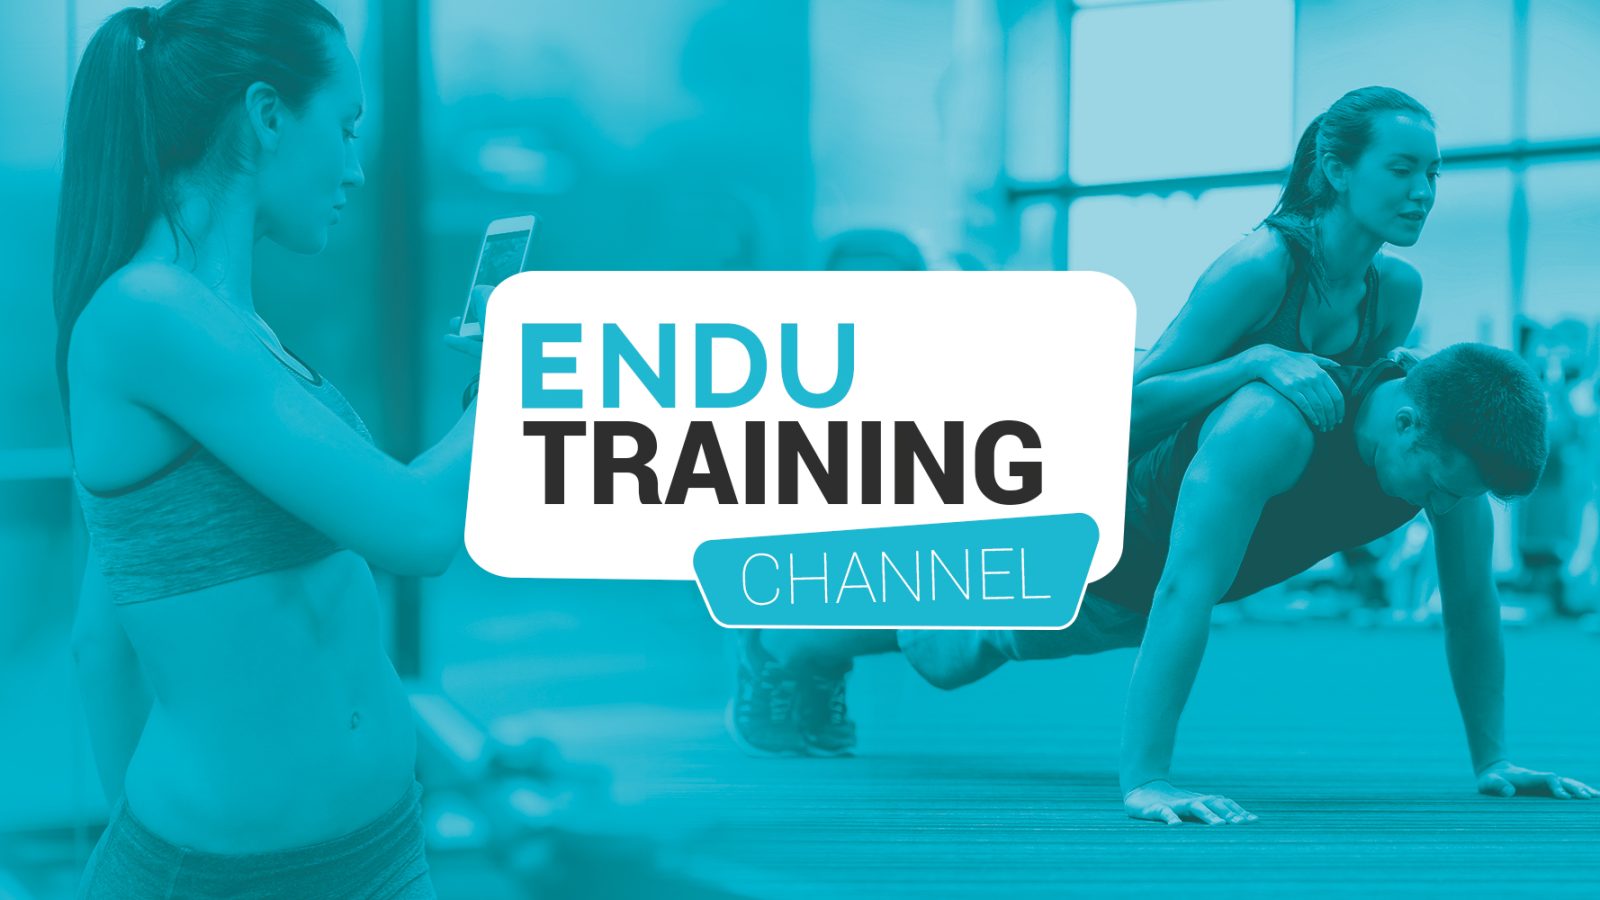 ENDU Training Channel presto on line!